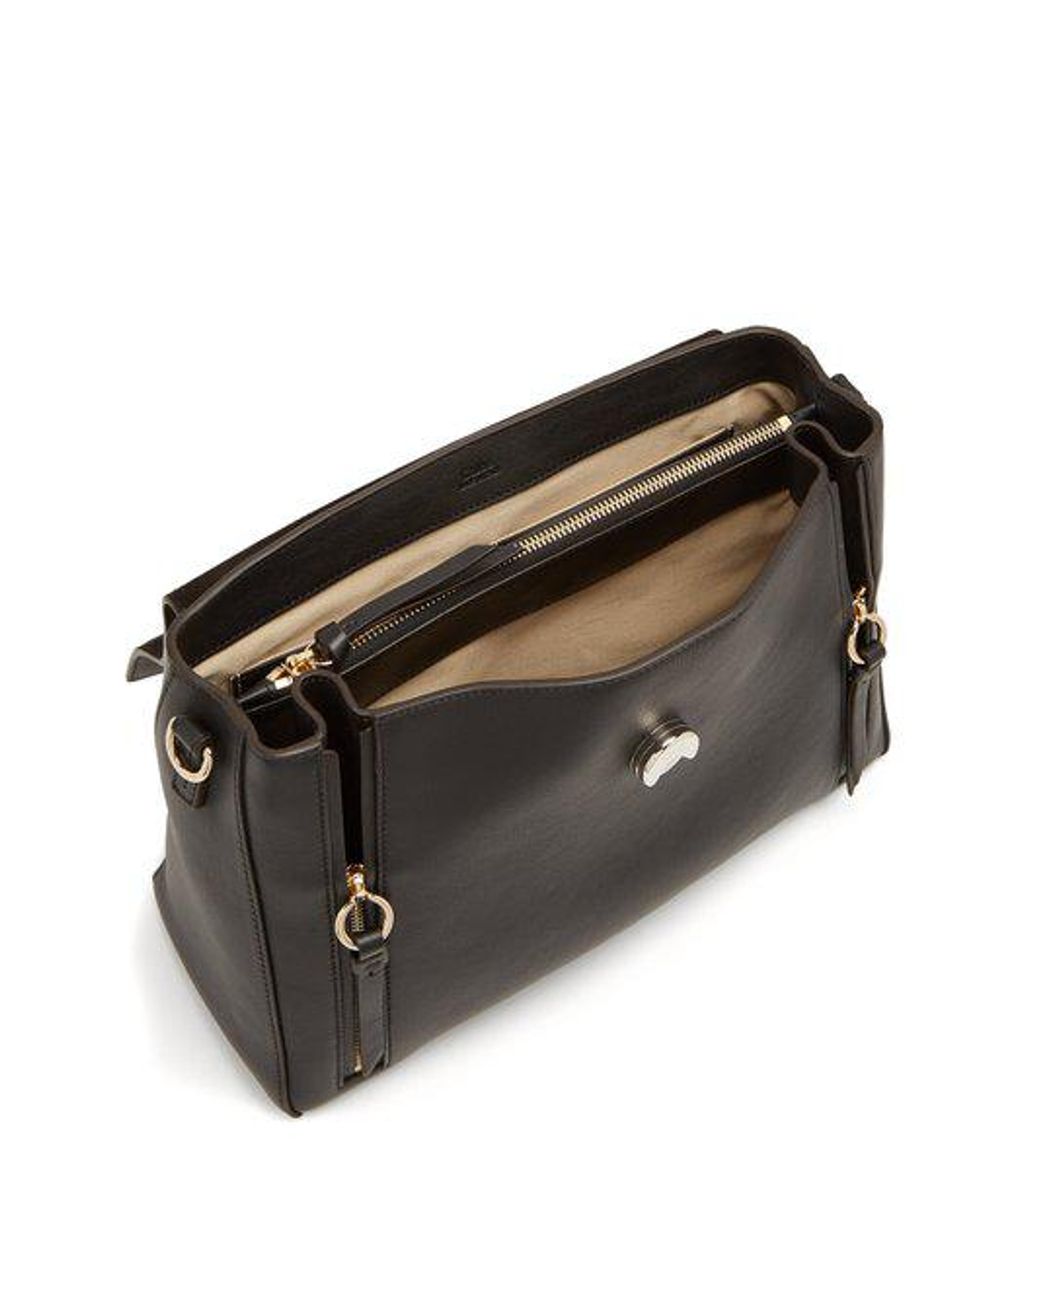 Chloé Faye Day Medium Leather Shoulder Bag in Black